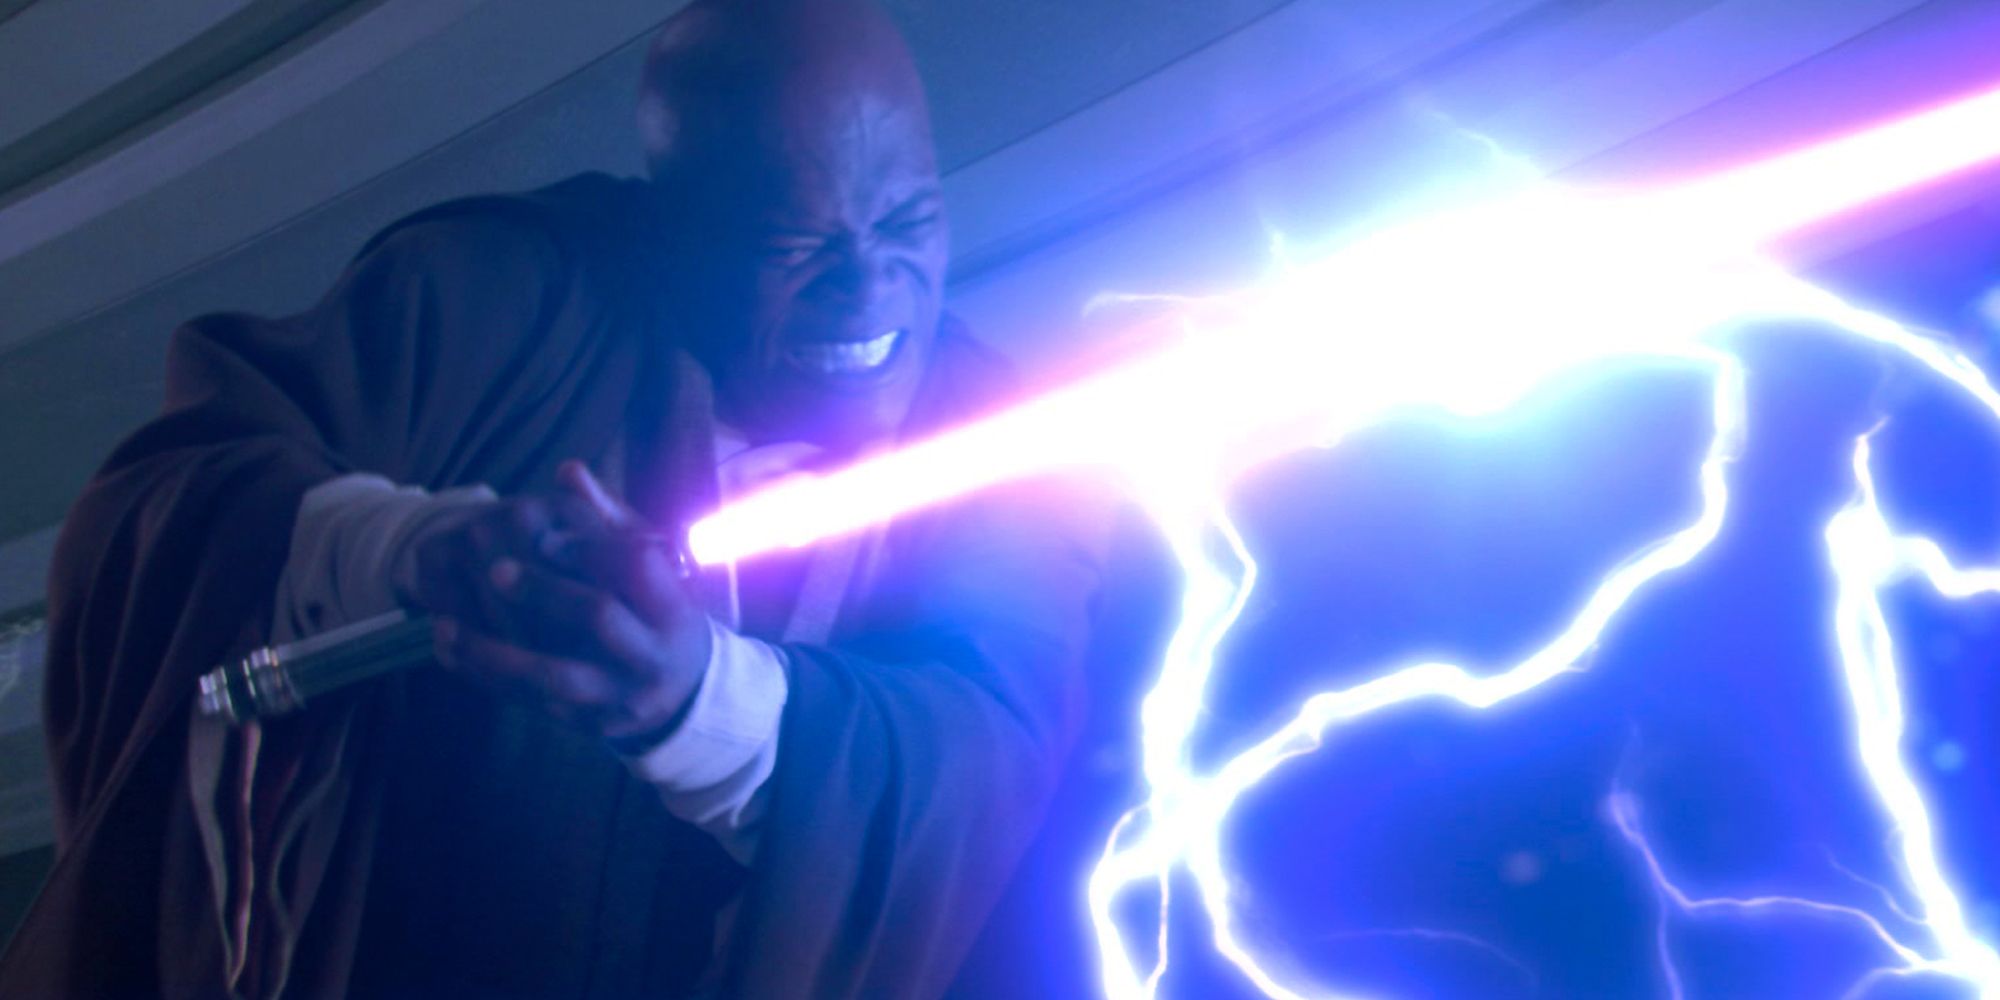 Samuel L Jackson's Mace Windu struggles to fight off Palpatine's blue lightning with his purple lightsaber